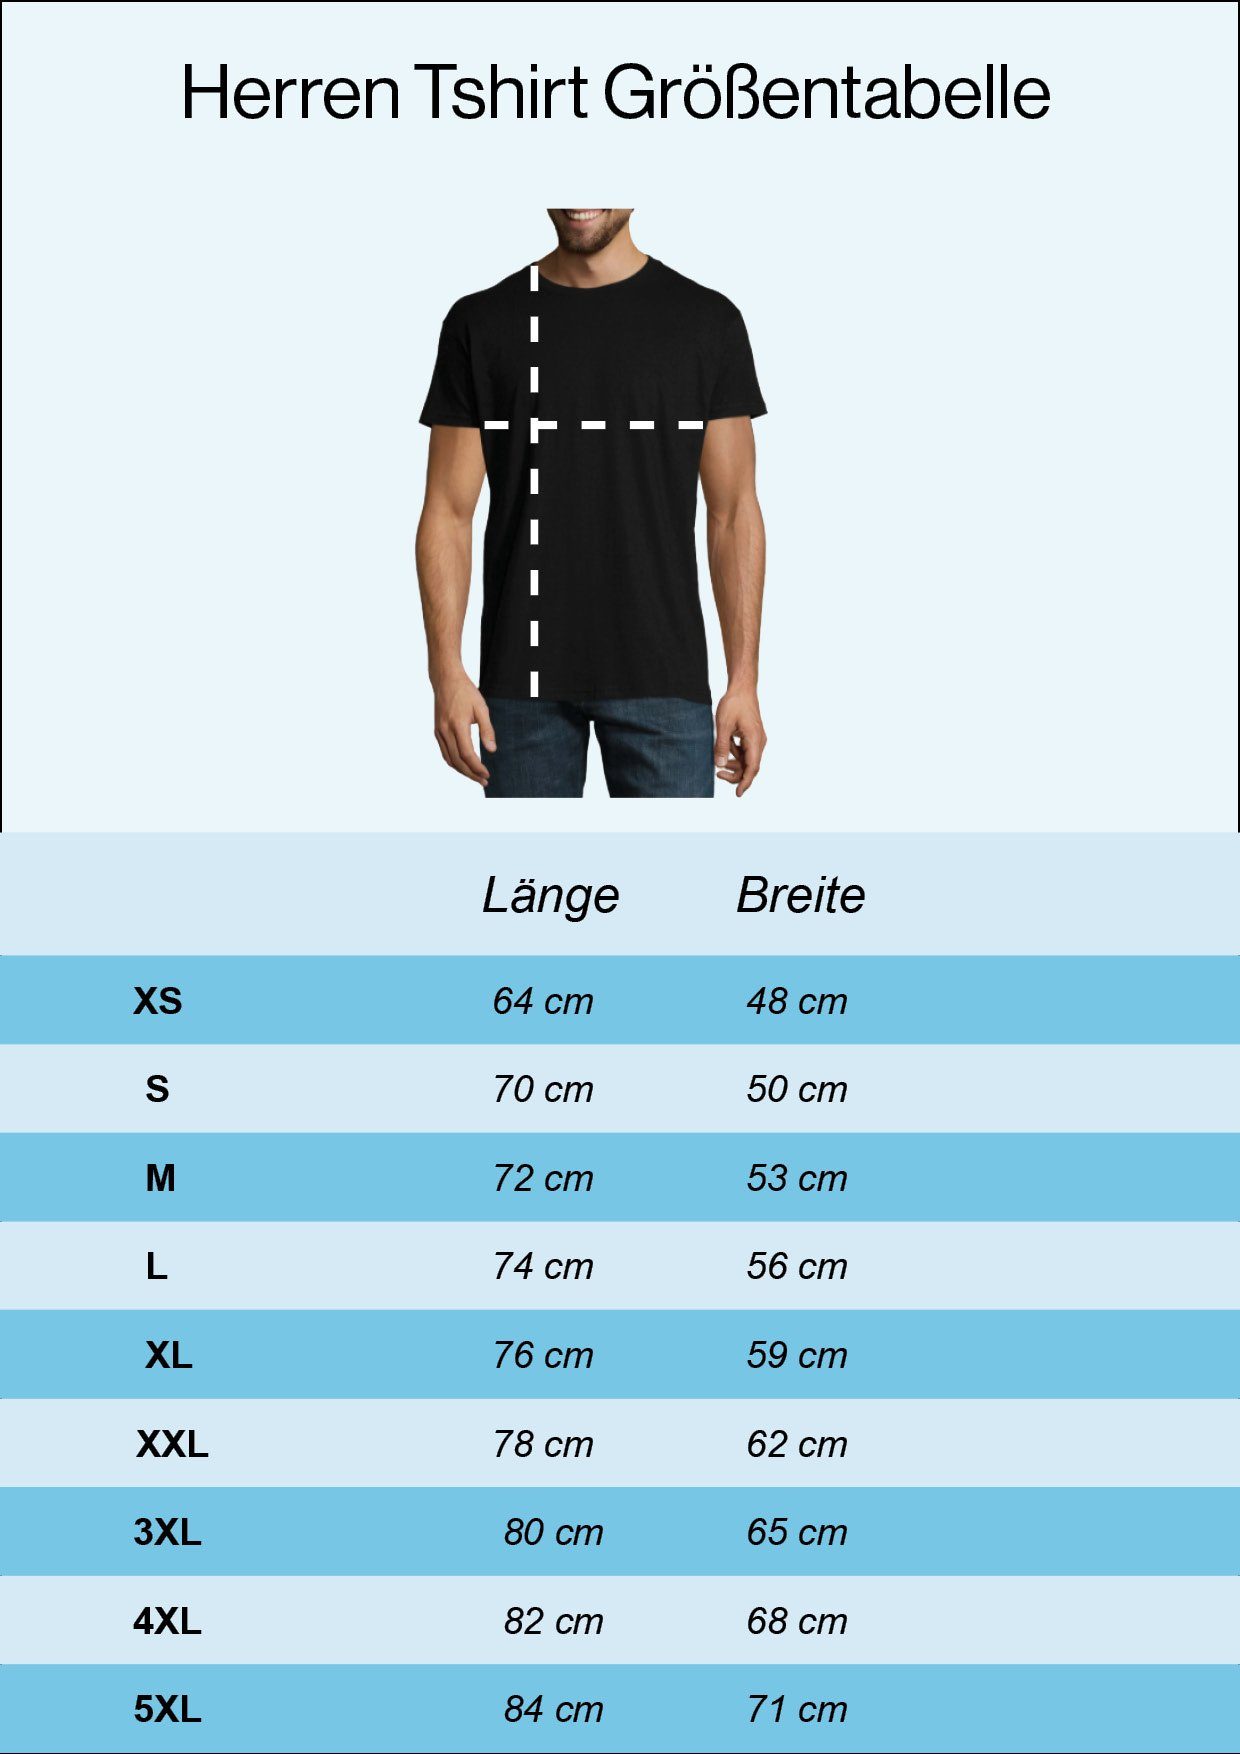 Navyblau trendigem Frontprint mit Youth T-Shirt Goku Shirt Designz Herren Super